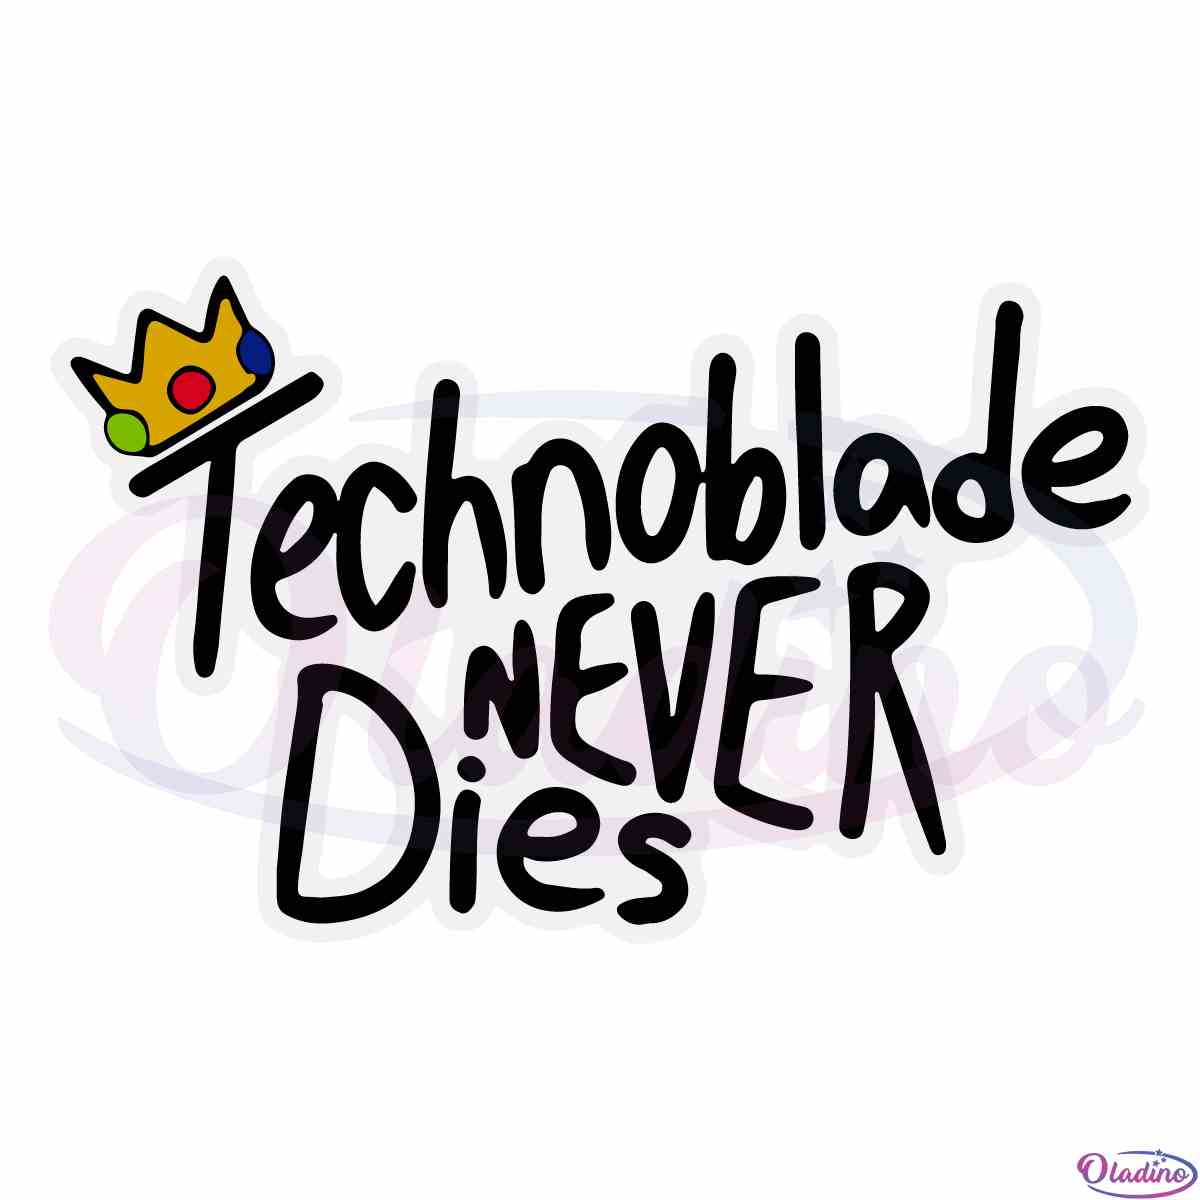 technoblade never dies !!